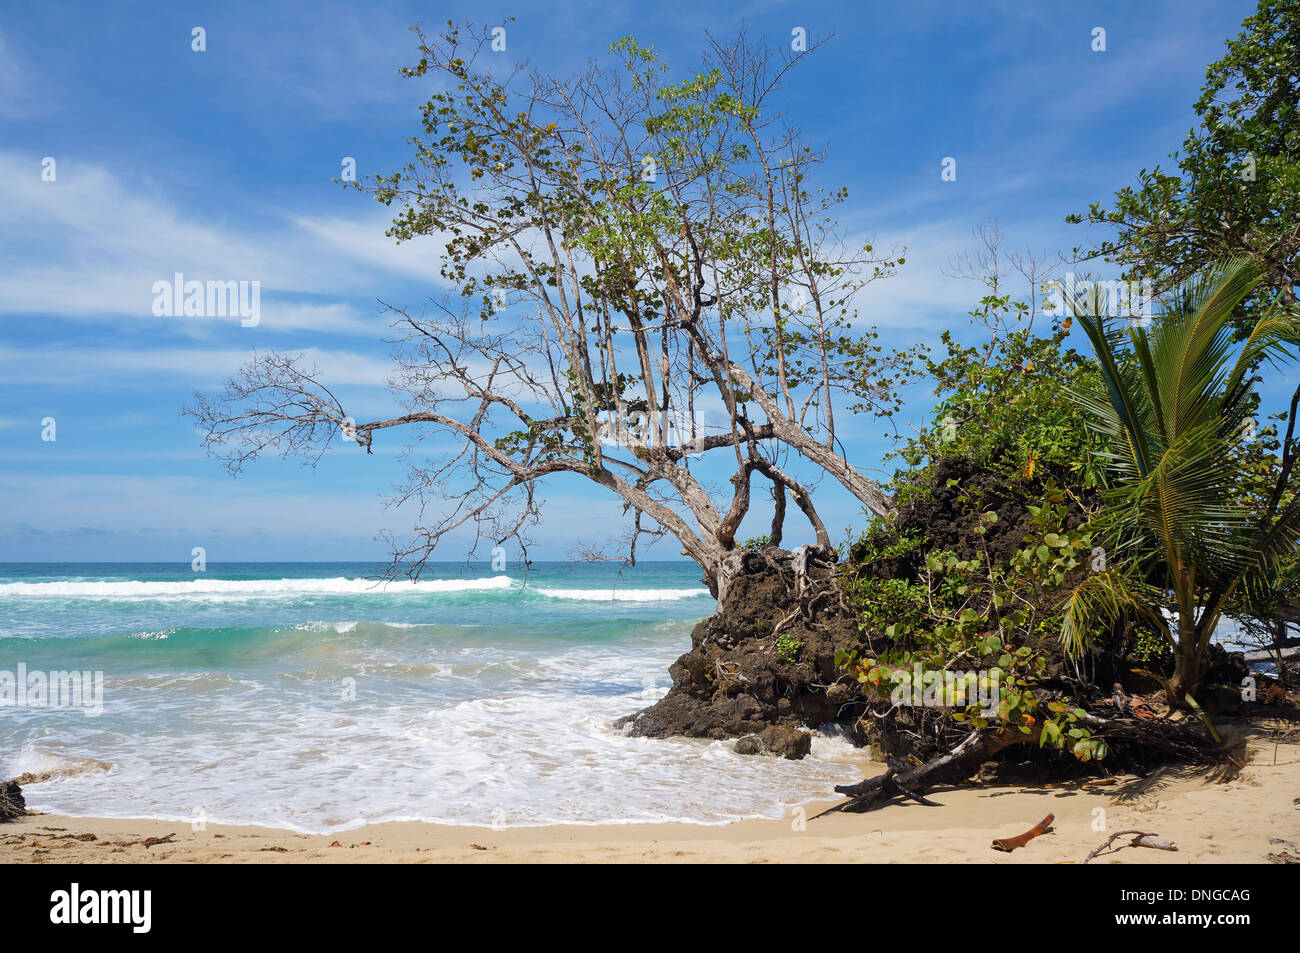 Seagrape tree leaning over the sea on a tropical beach, Caribbean sea Stock Photo